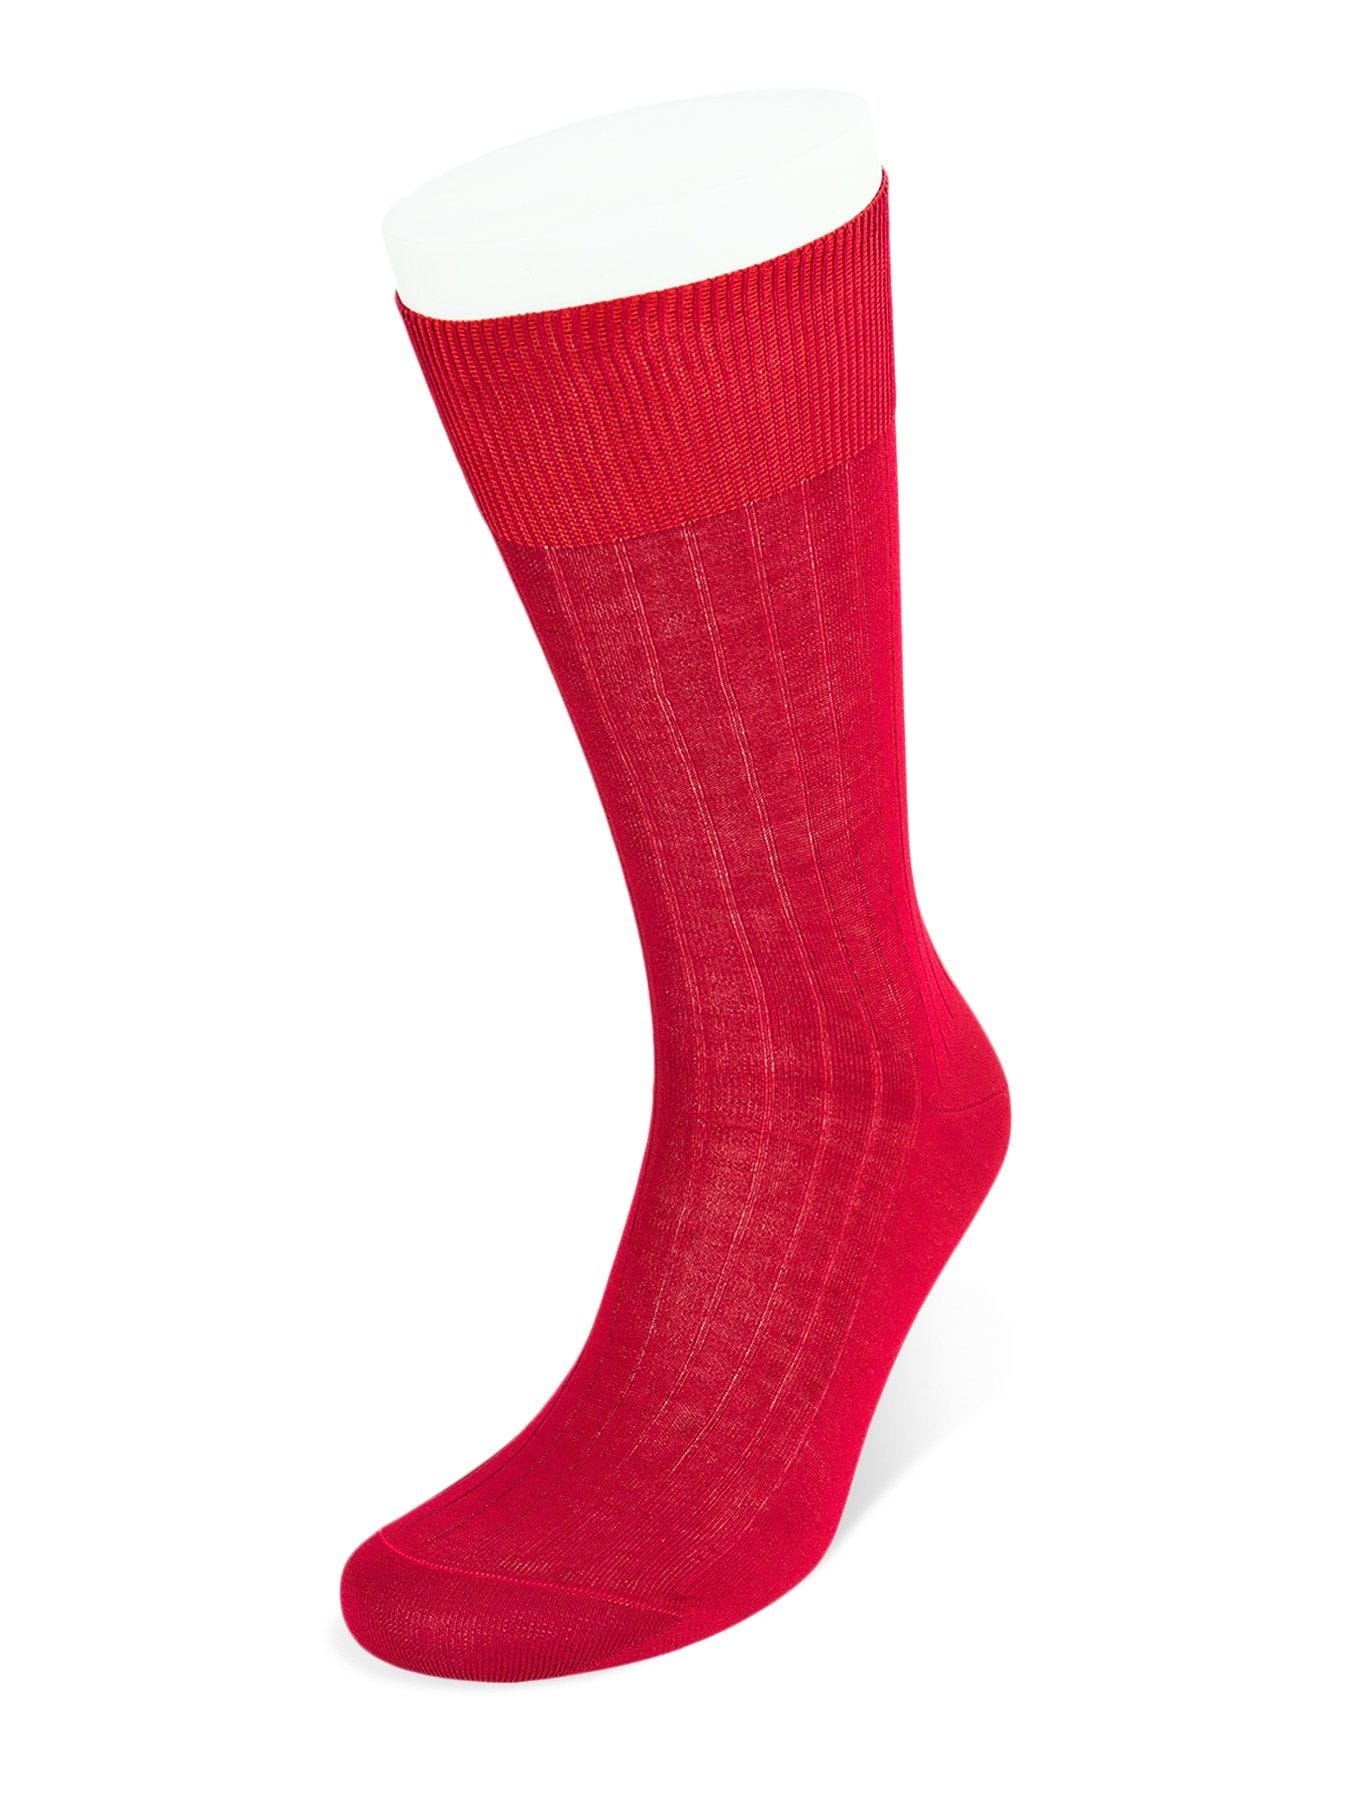 Short Plain Deep Red Cotton Socks